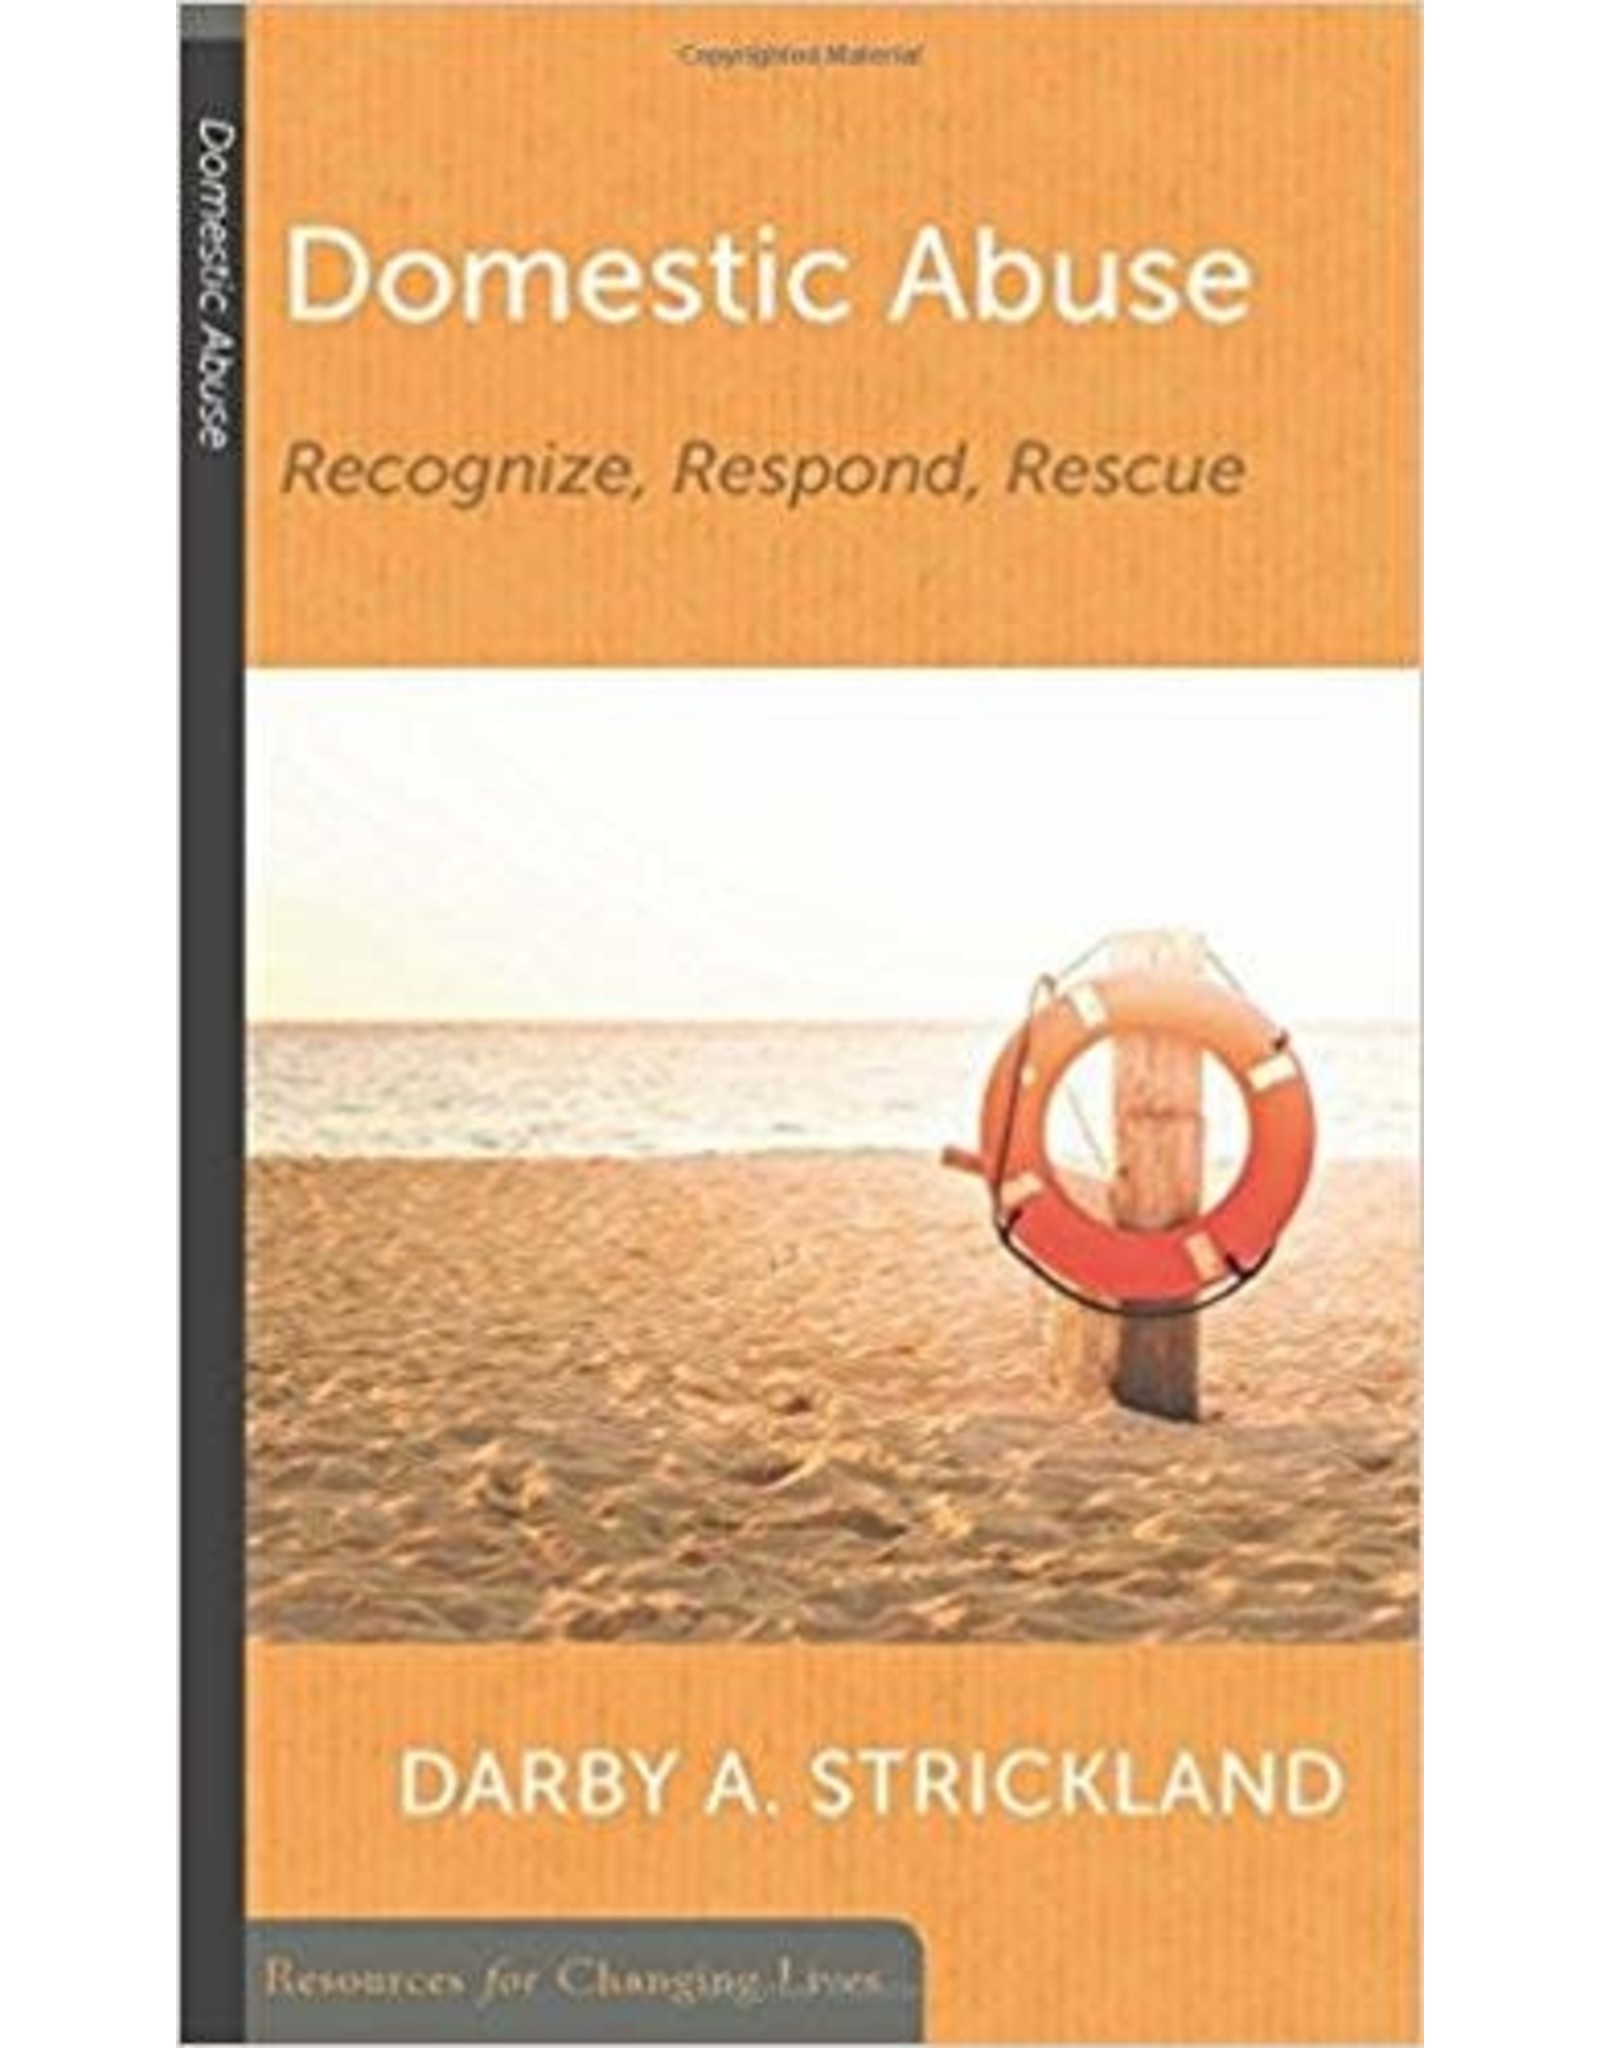 Darby Strickland Domestic Abuse: Recognize, Respond, Rescue